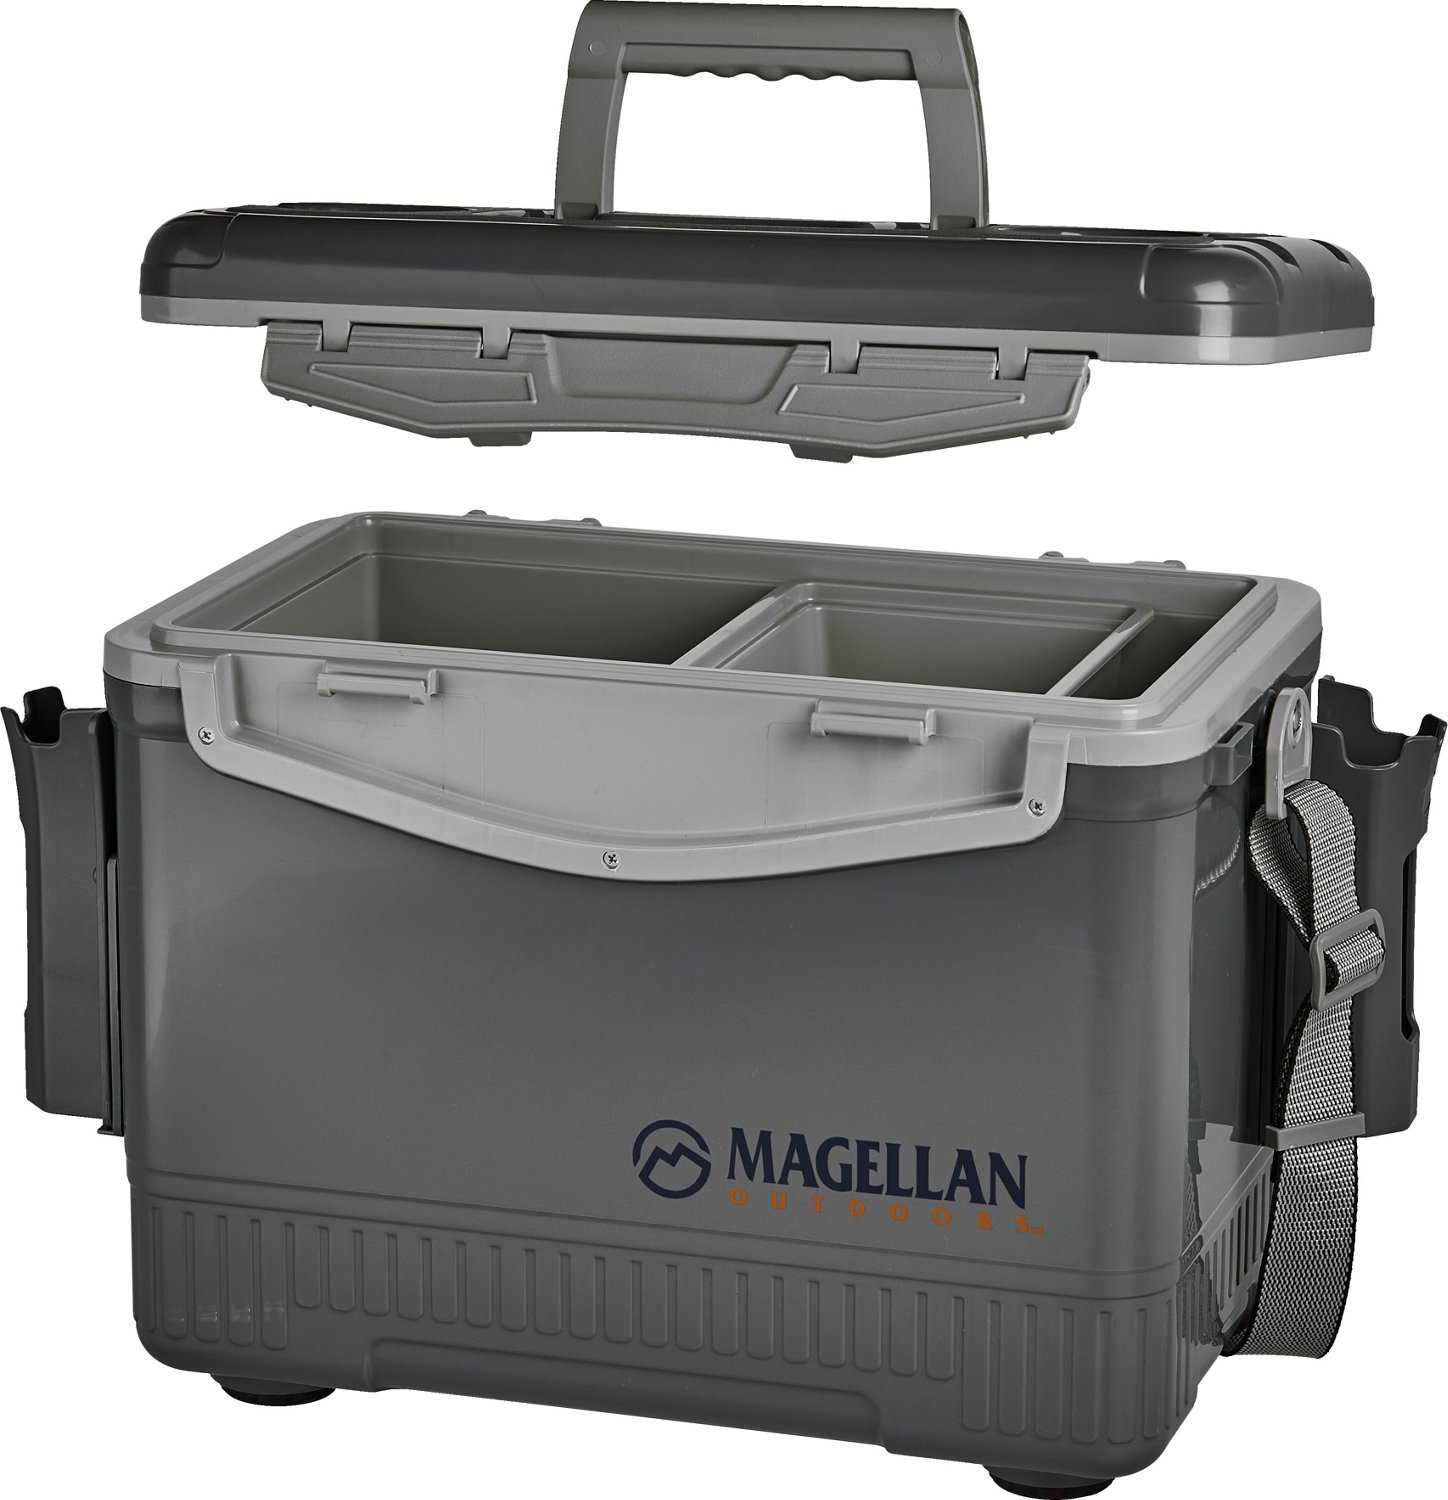 Magellan Outdoors 19 qt Aerator Dry Box